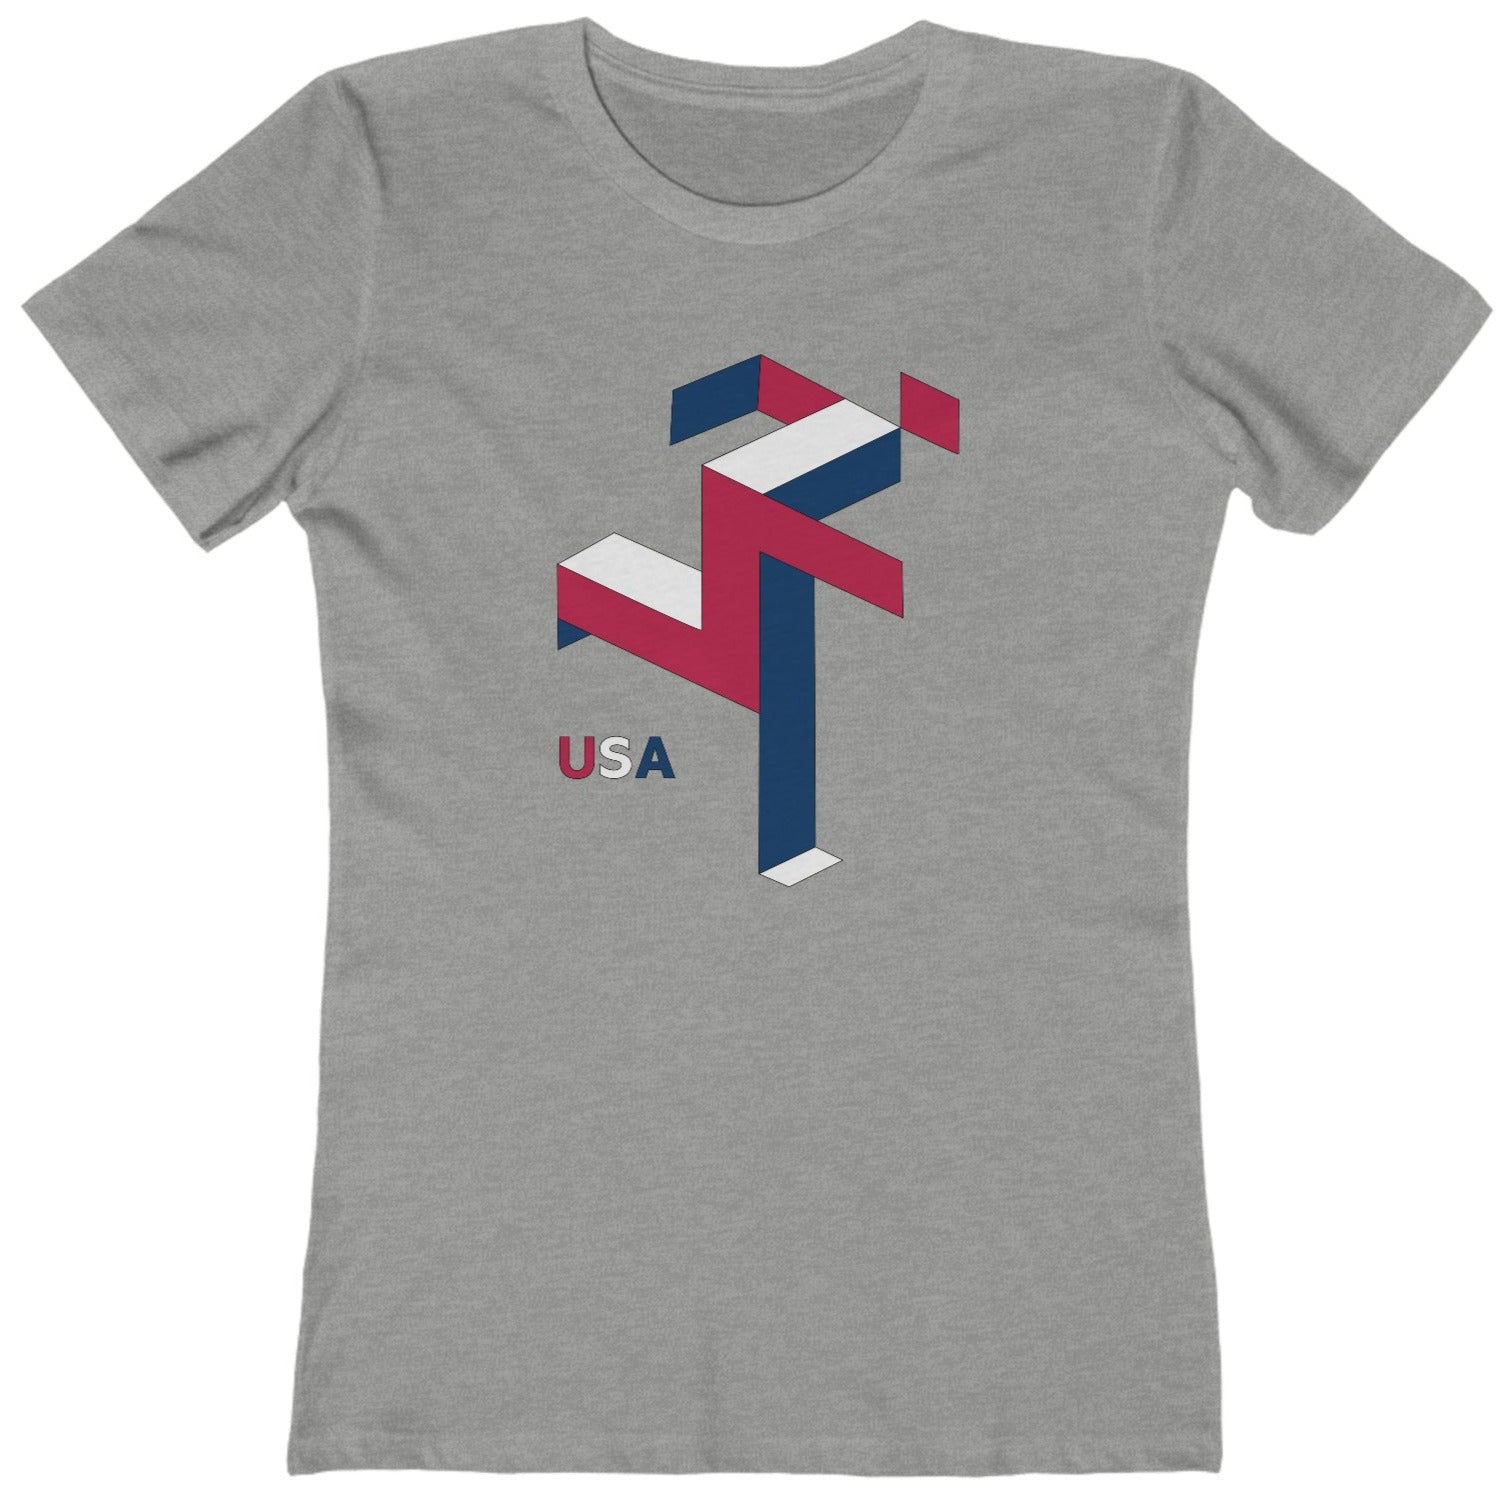 USA runner Olympics t shirt